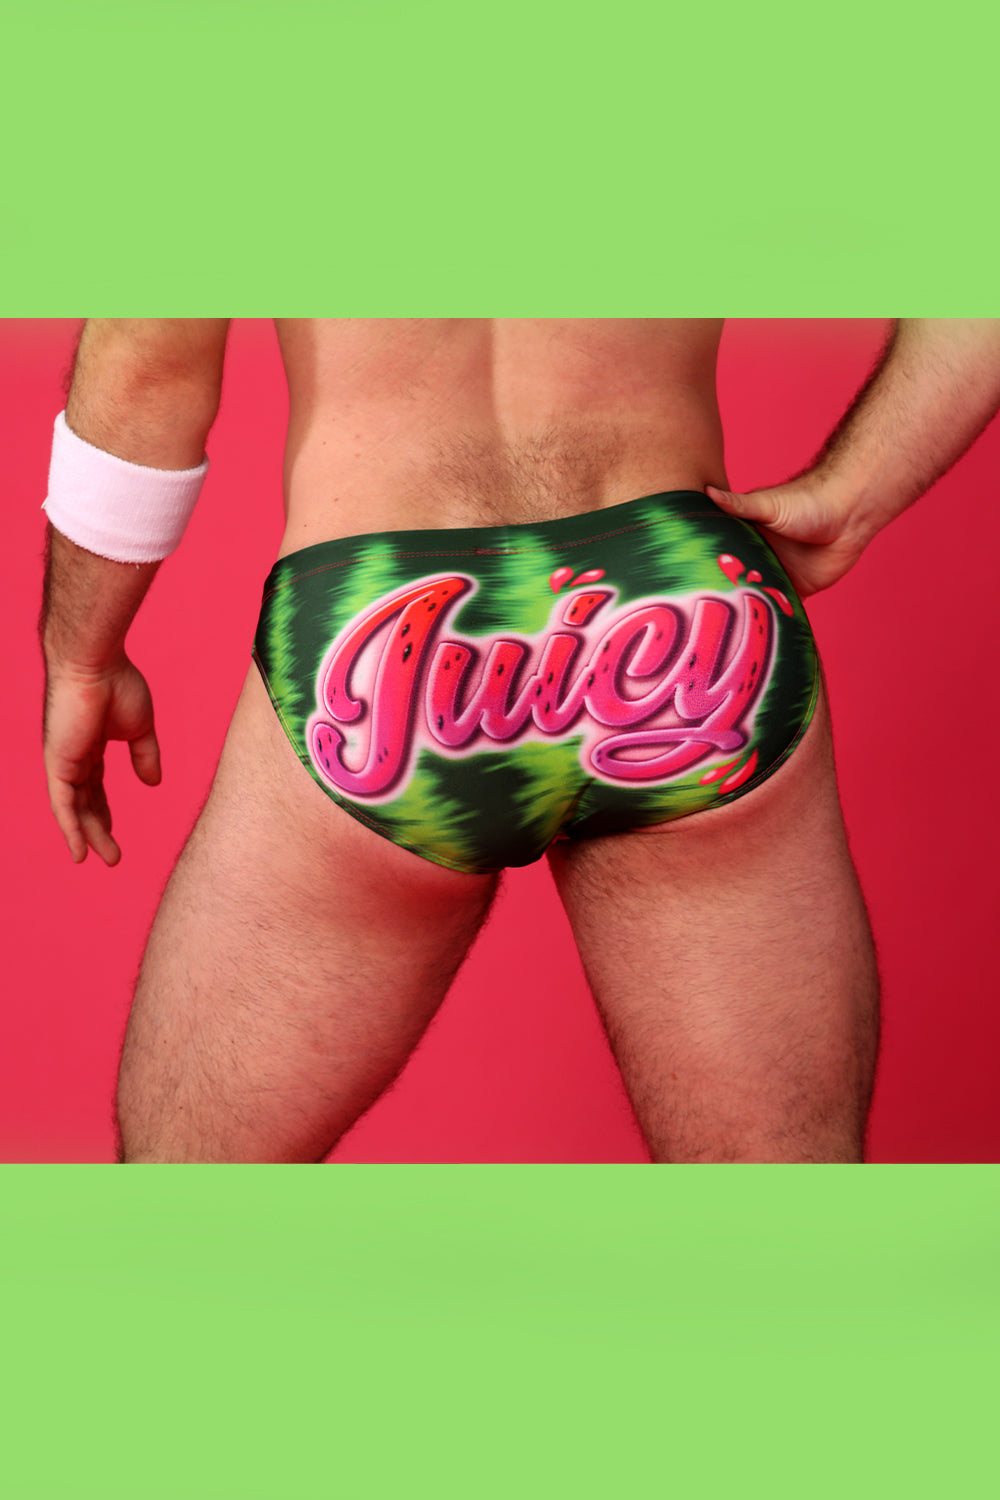 Juicy Watermelon Swimsuit - Slick It Up 